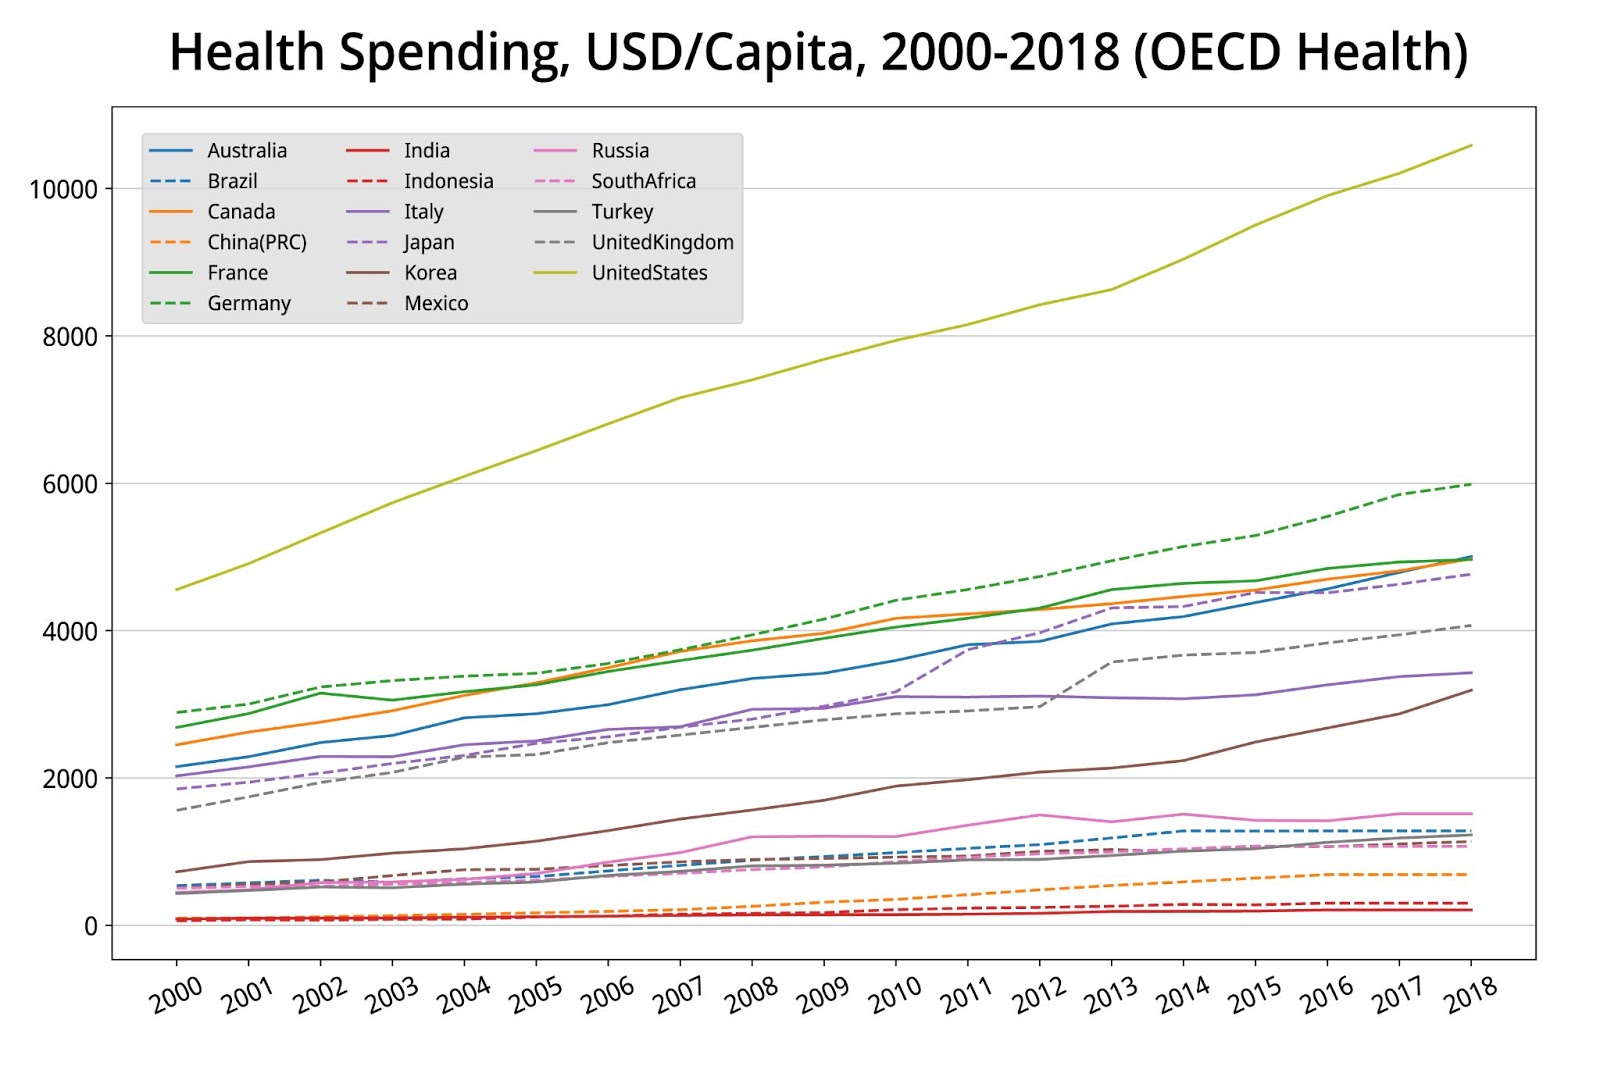 Health Spending Per Capita in G20 Countries